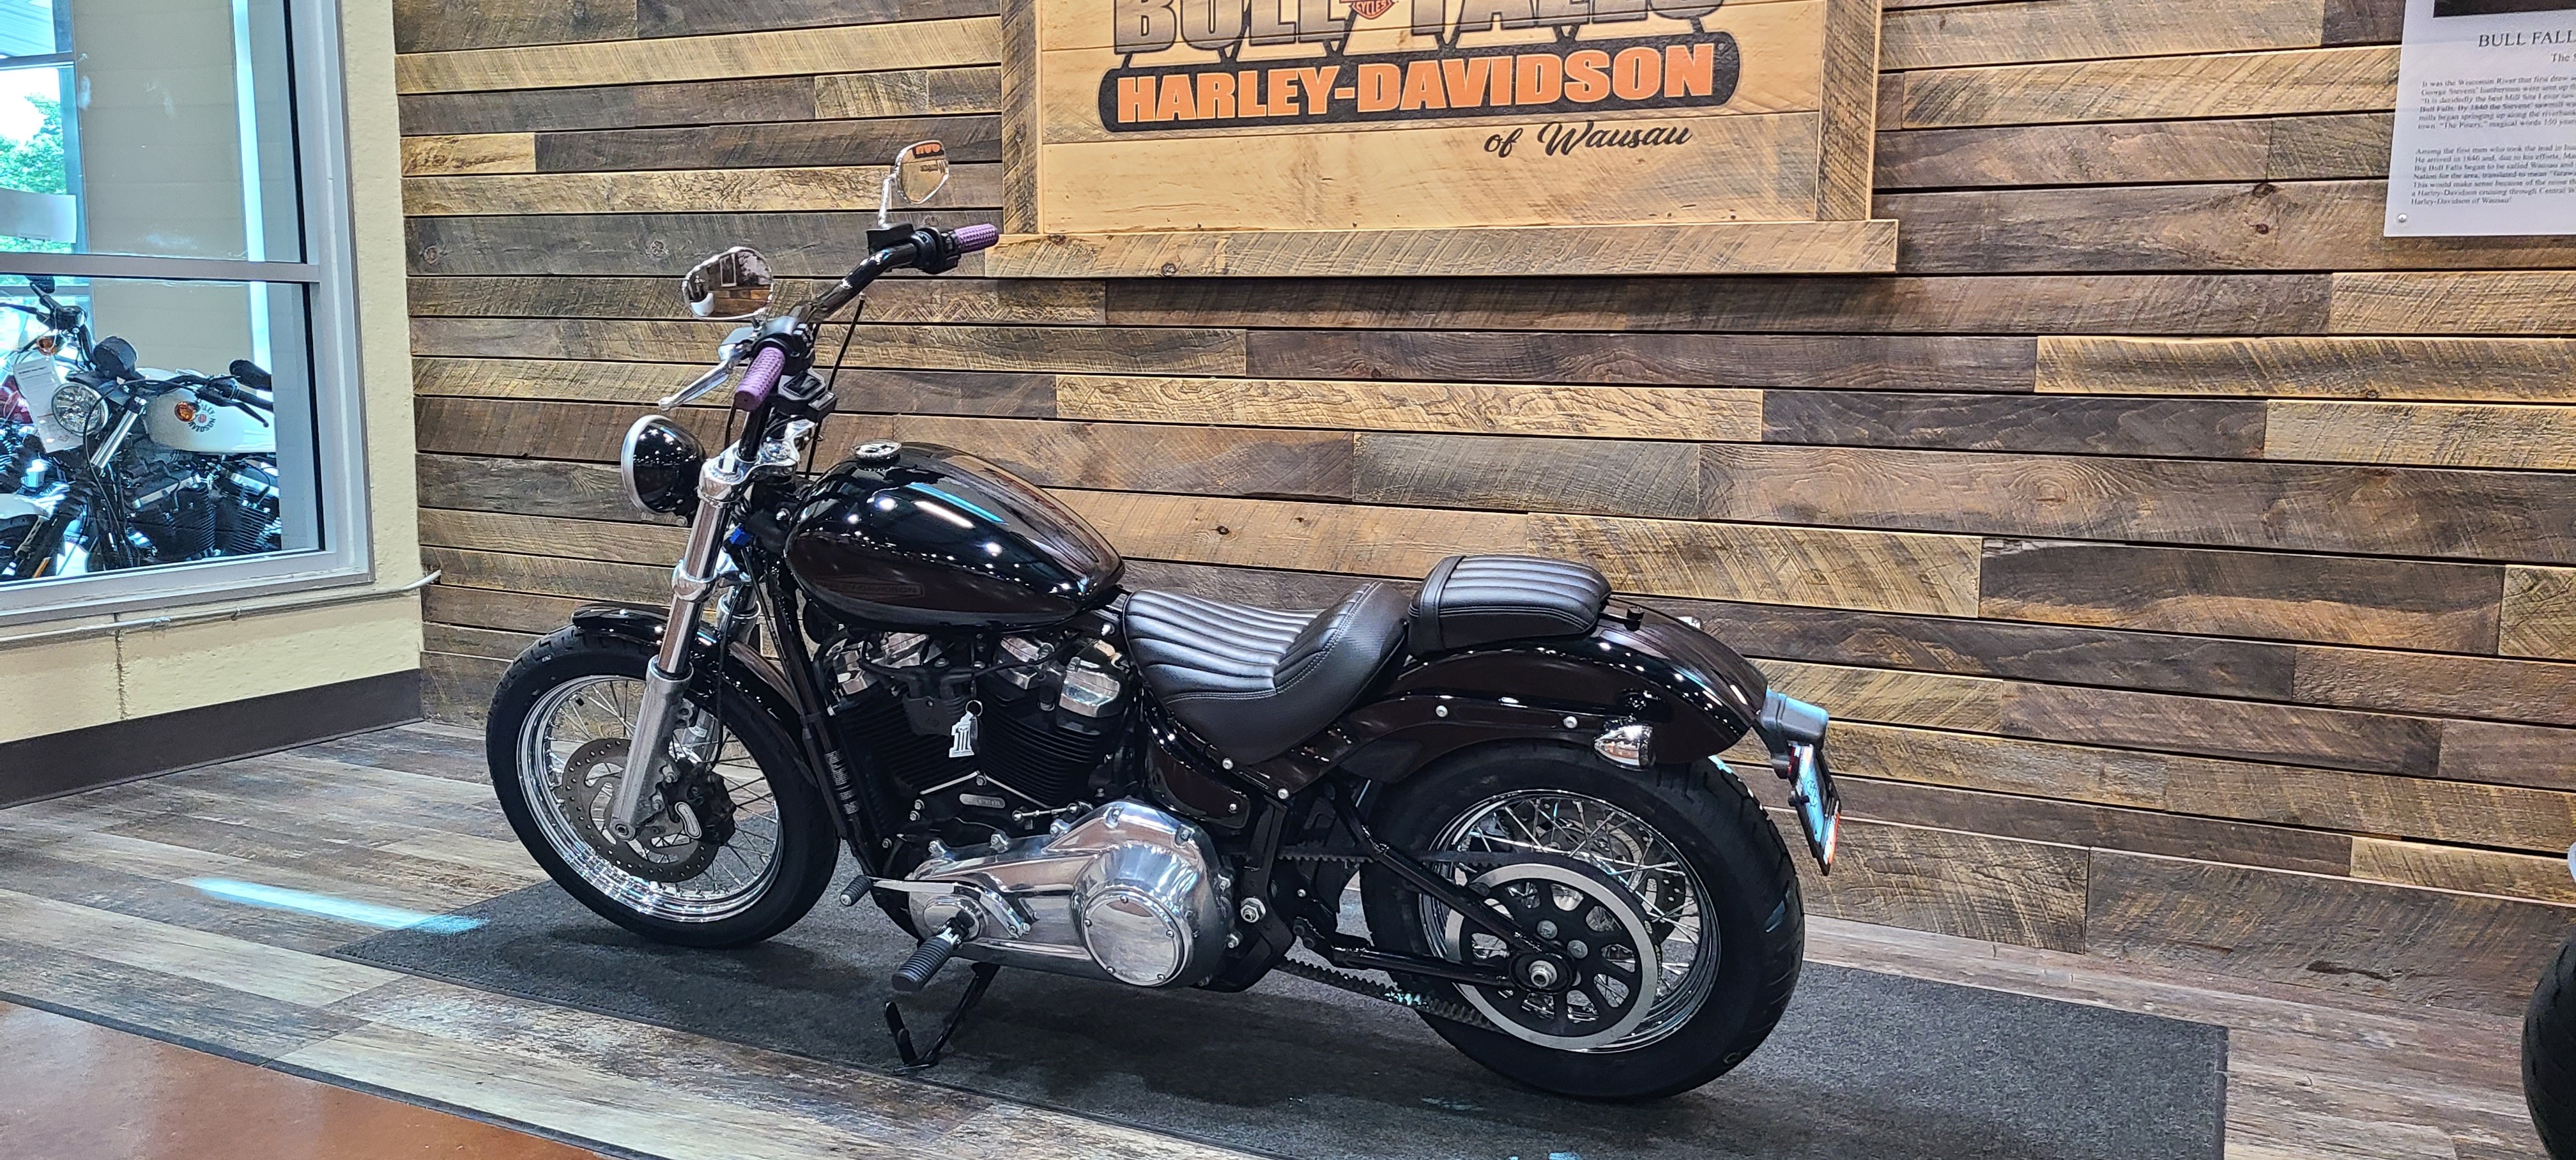 2020 Harley-Davidson Softail Standard at Bull Falls Harley-Davidson